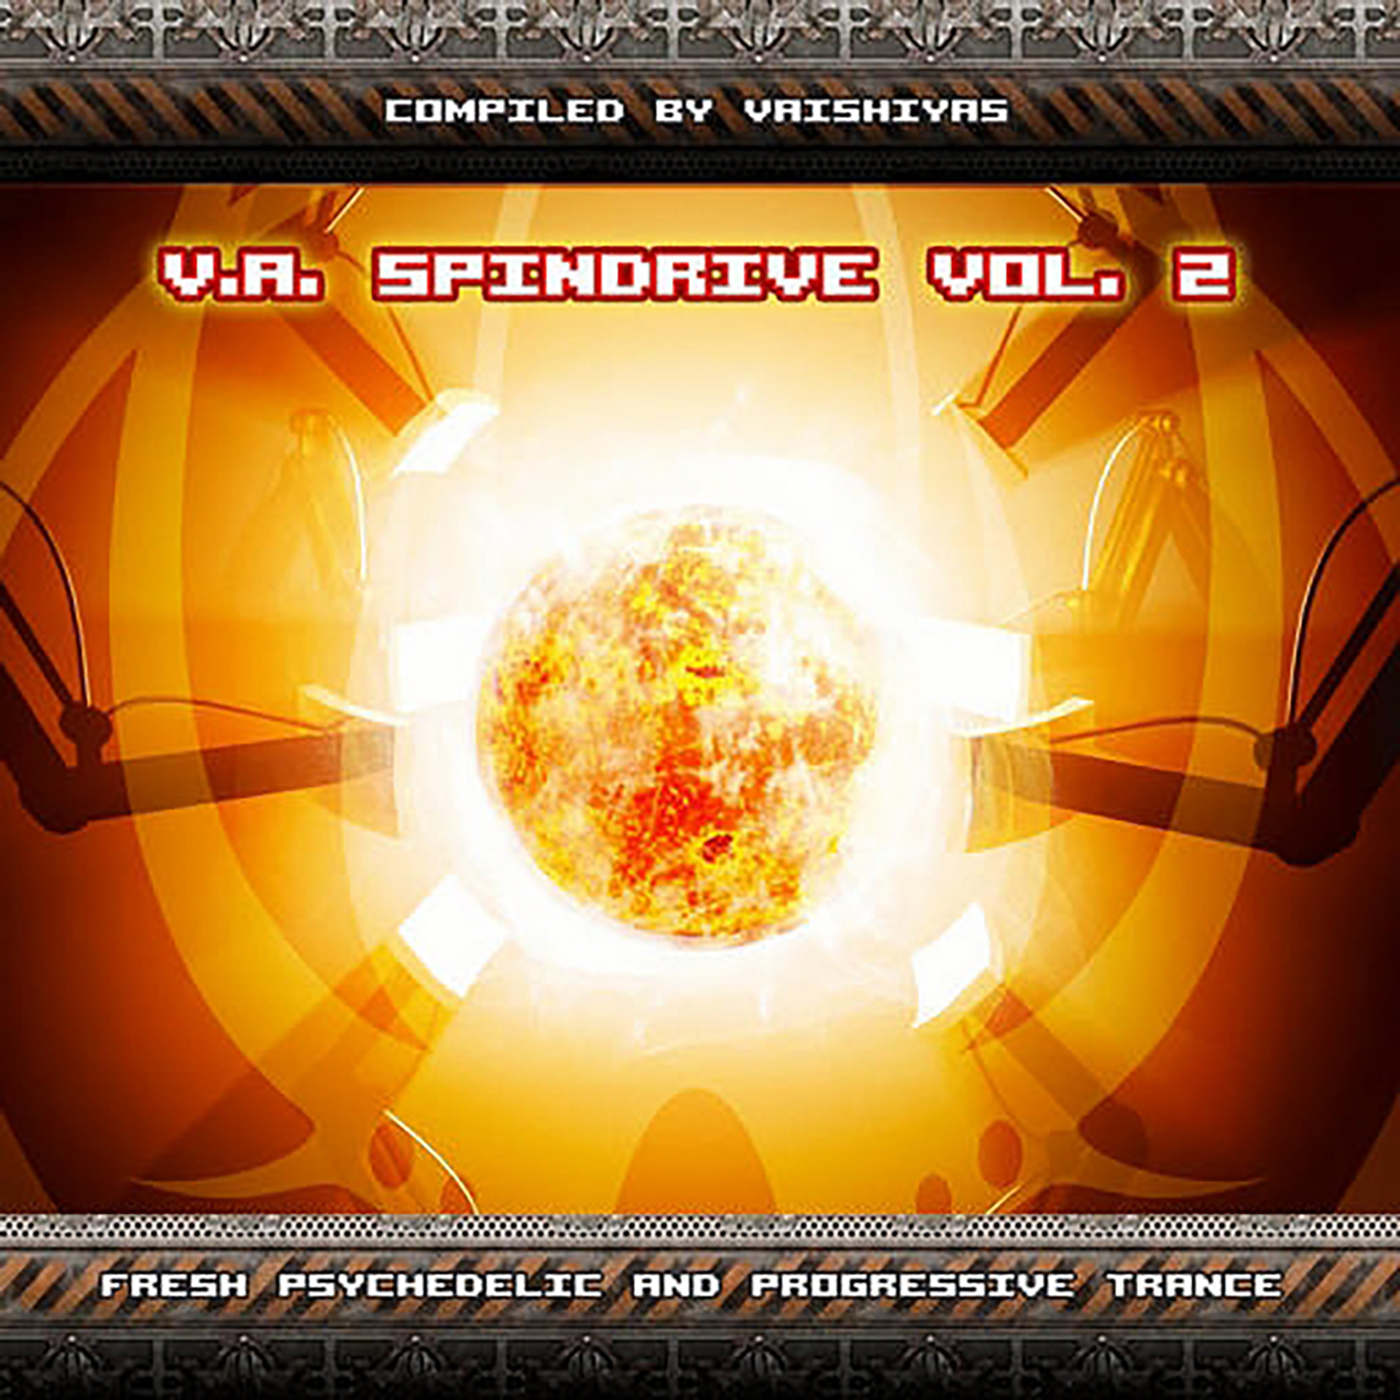 Emphacis – Satnight „Spindrive“ Vol. 2, on Spintwist Records